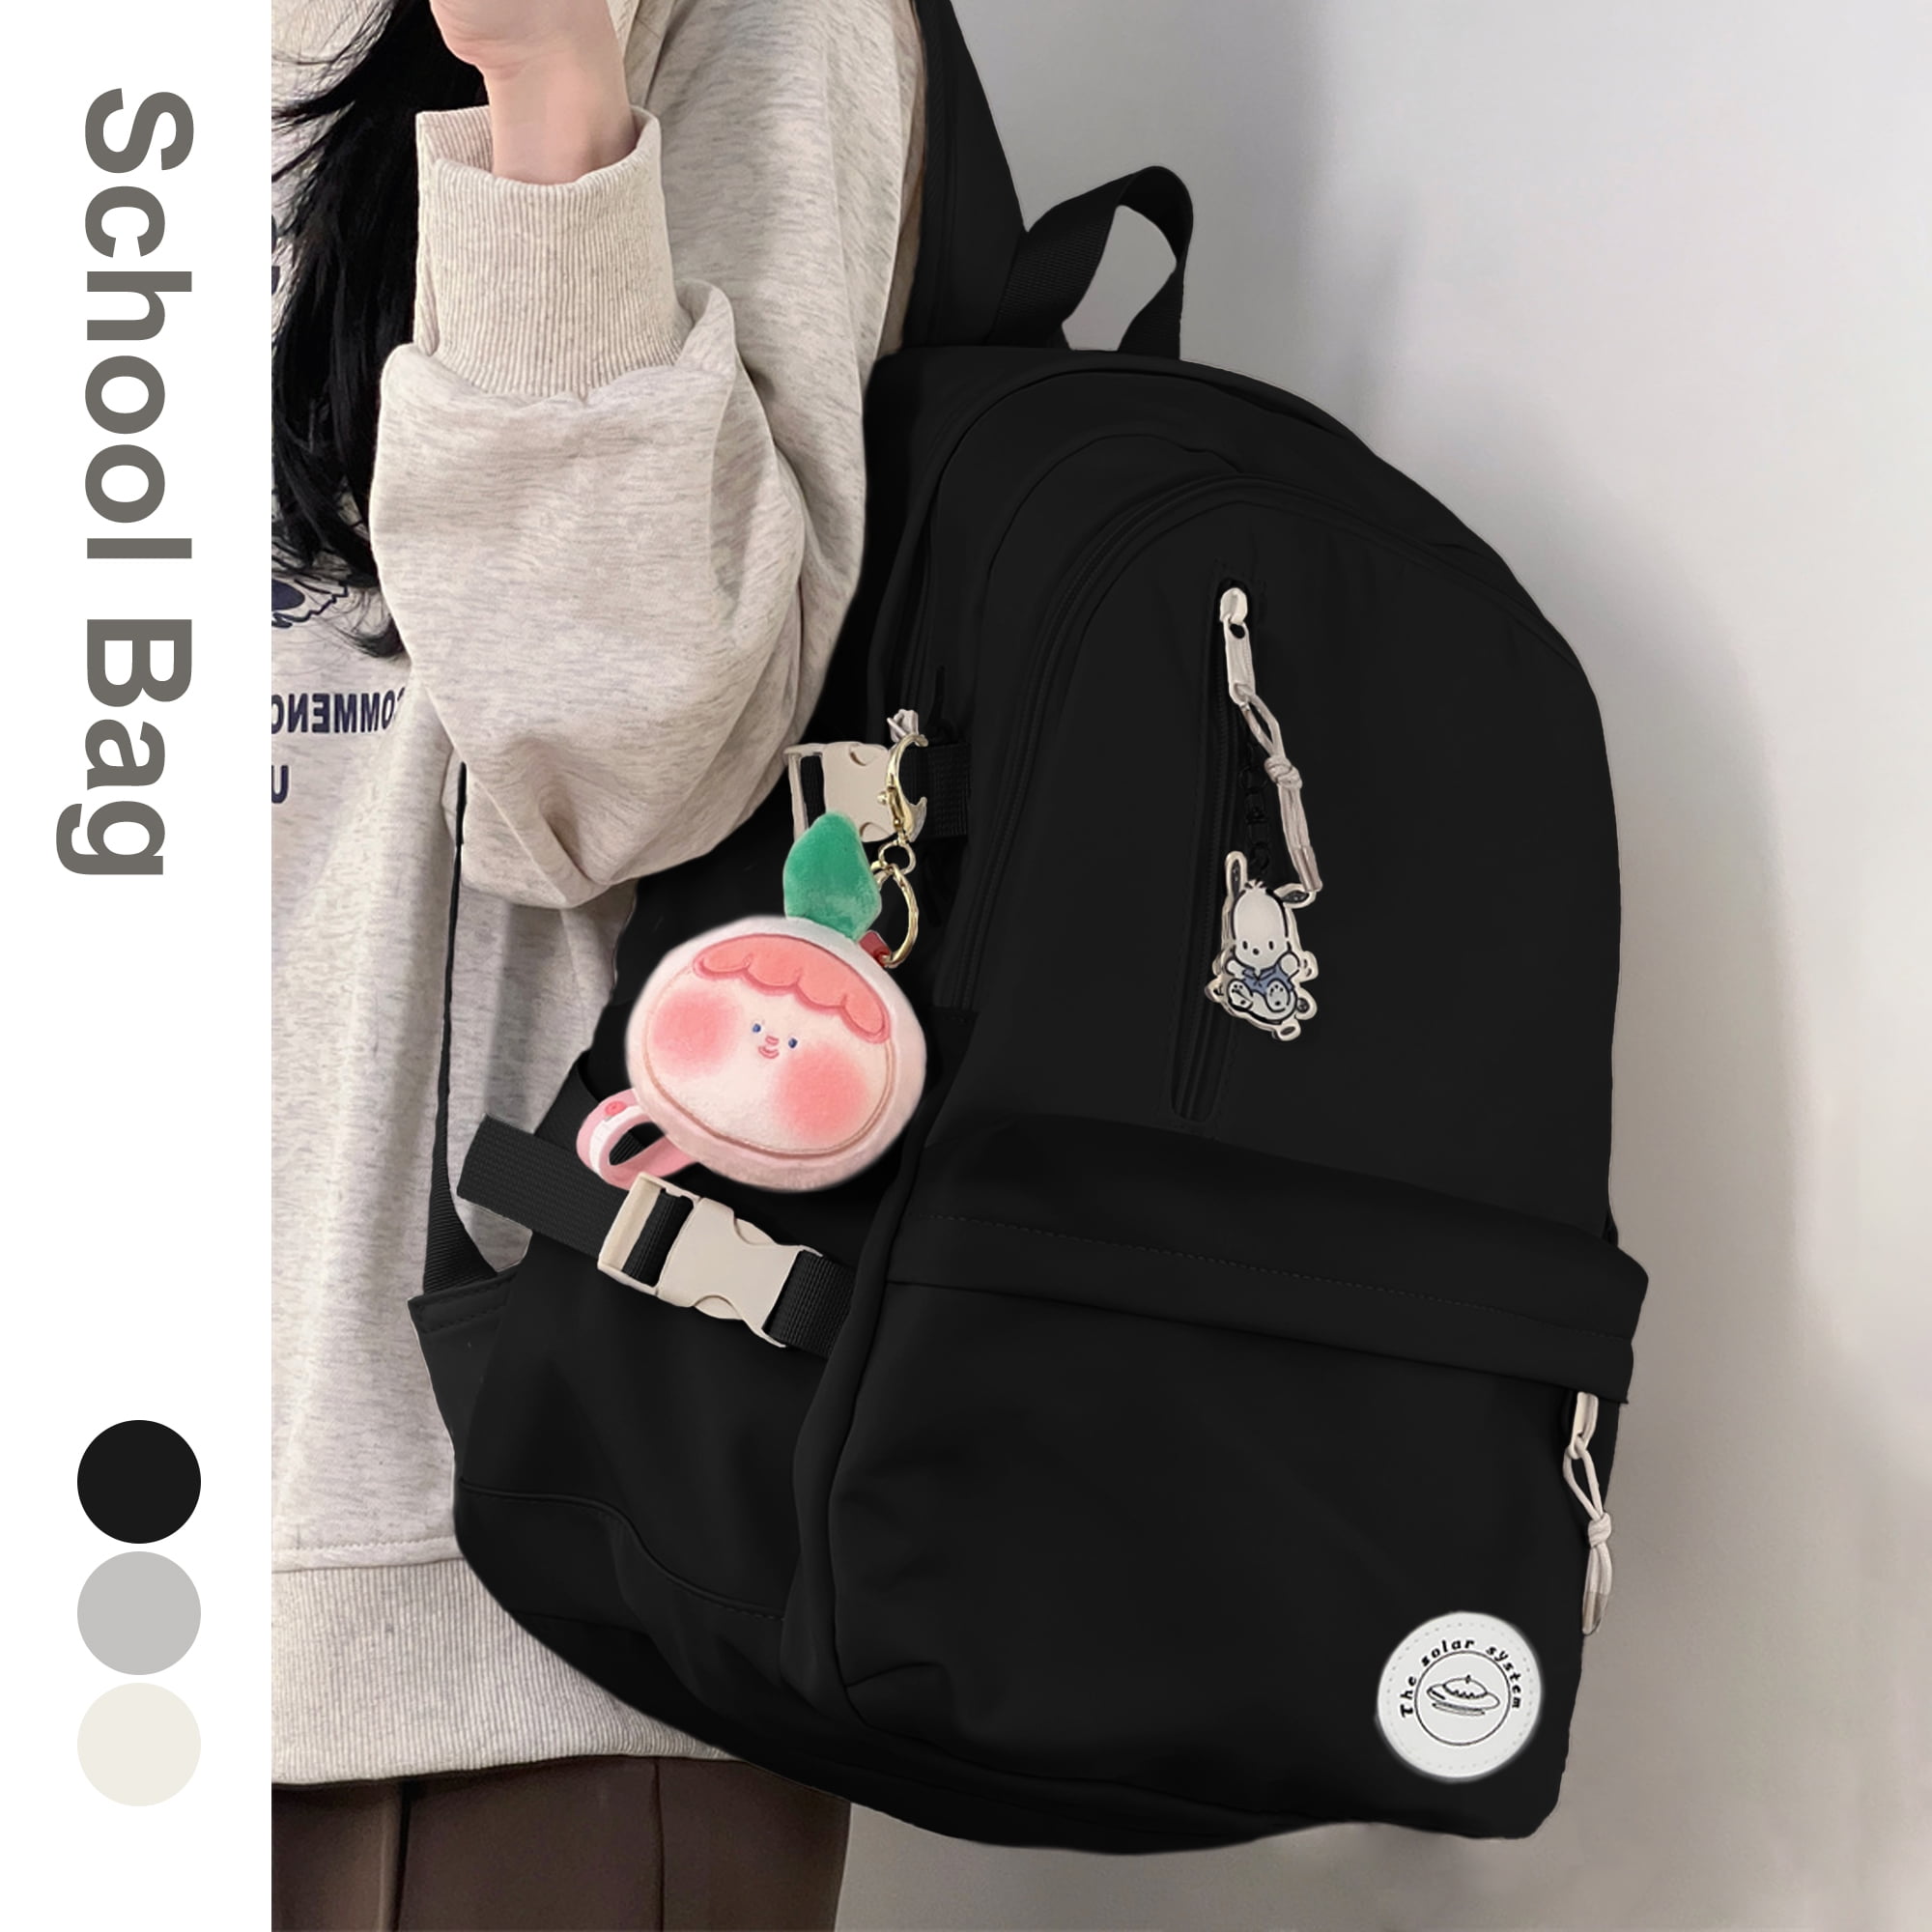 BJLFS School Backpack Waterproof Black Bookbag College High School Bags for Boys Girls Lightweight Travel Rucksack Casual Daypack Laptop Backpacks for